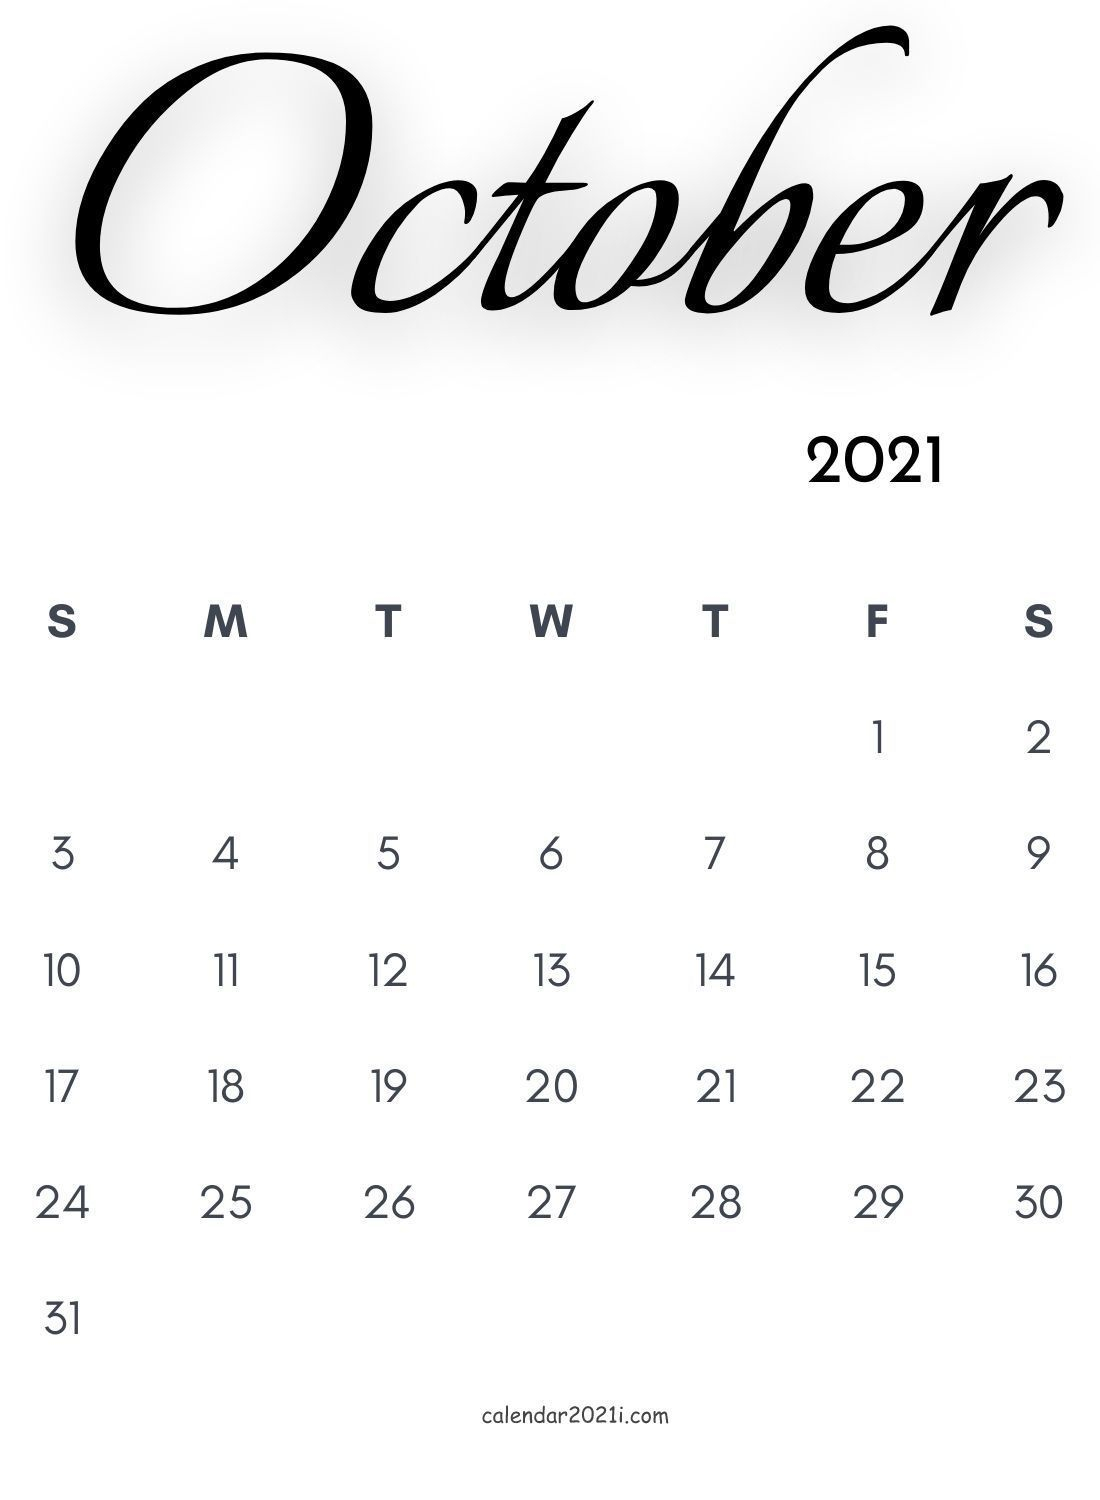 October 2021 Calendar Wallpapers - Wallpaper Cave